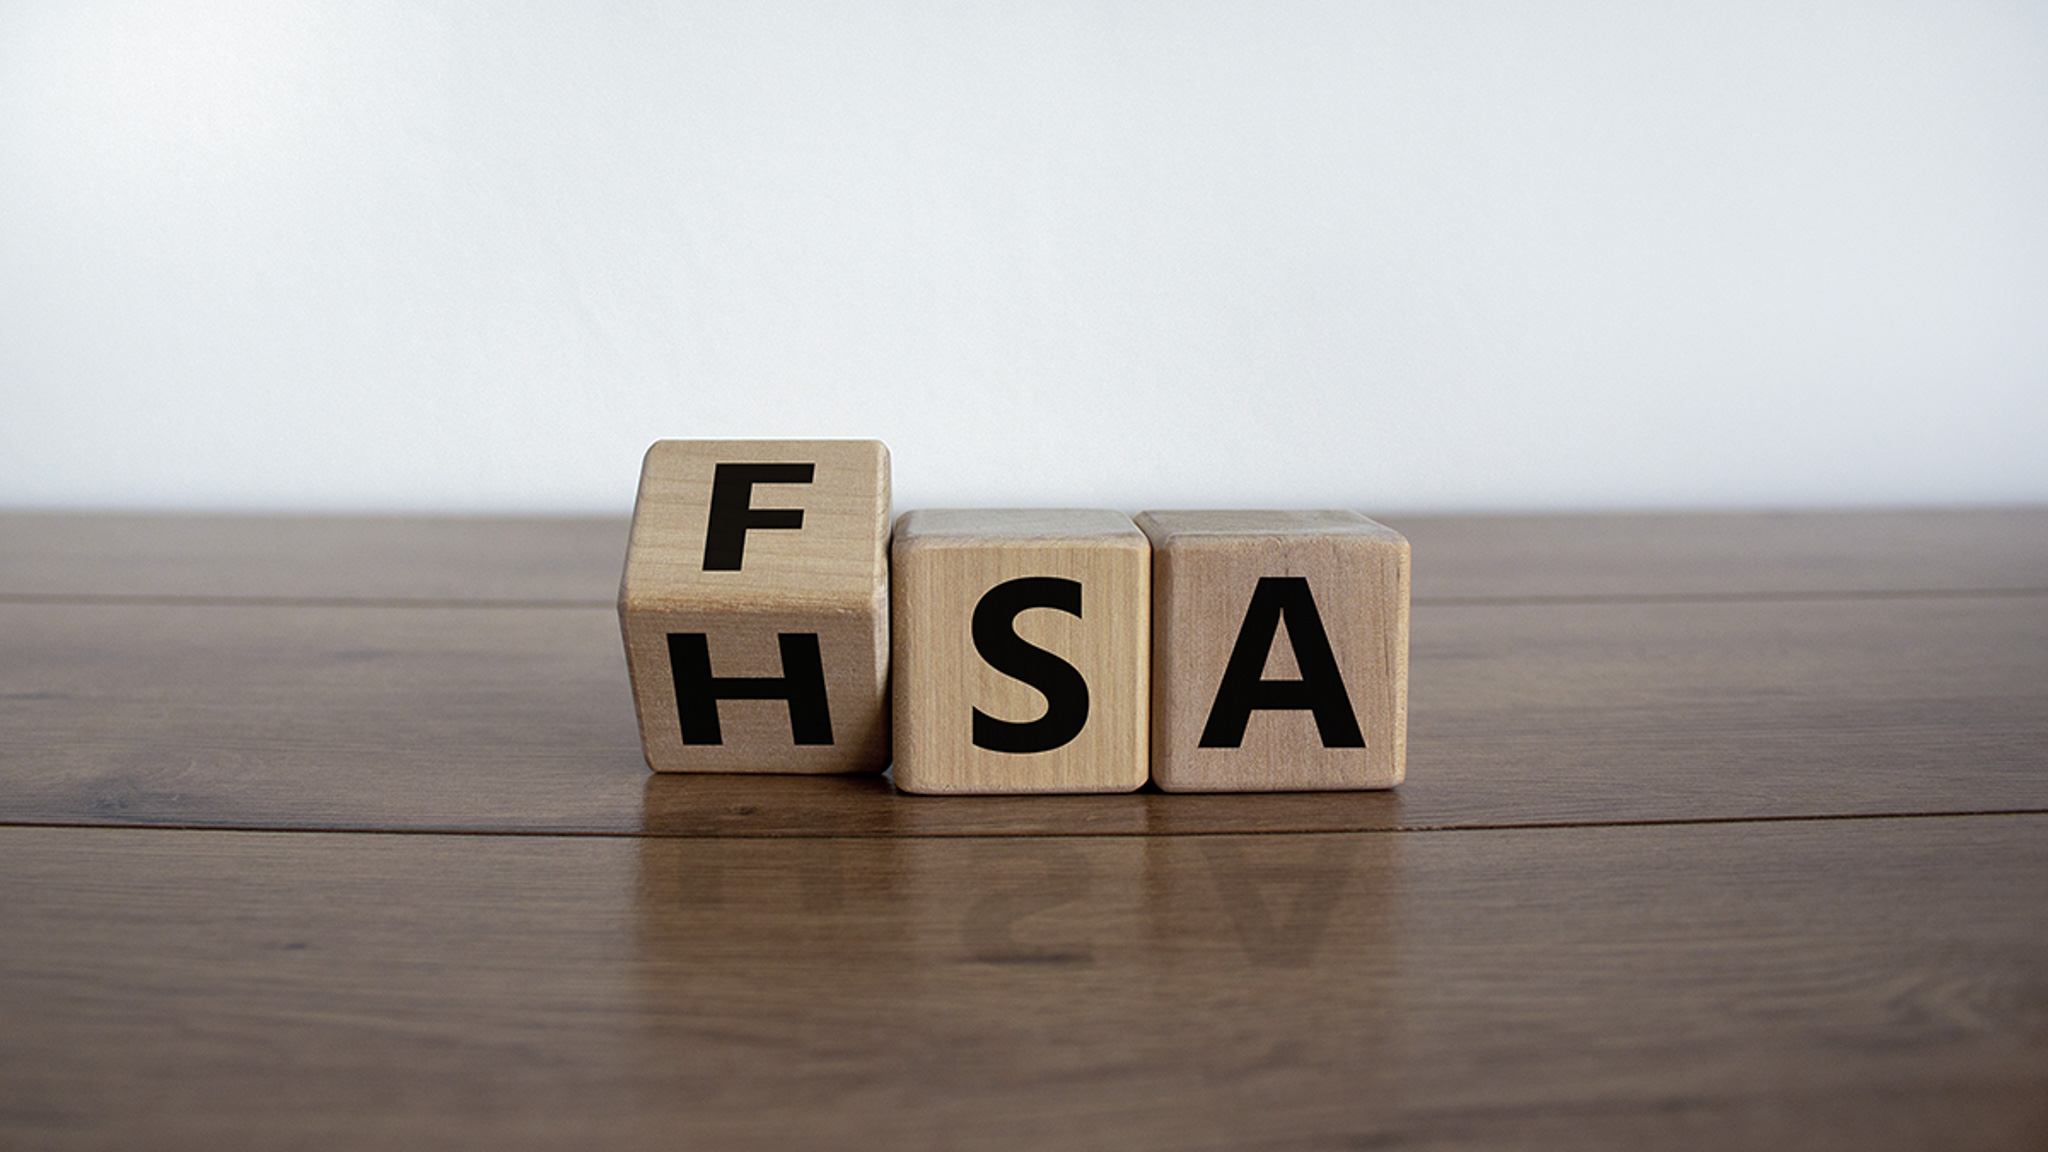 HRA vs. HSA vs. FSA comparison chart